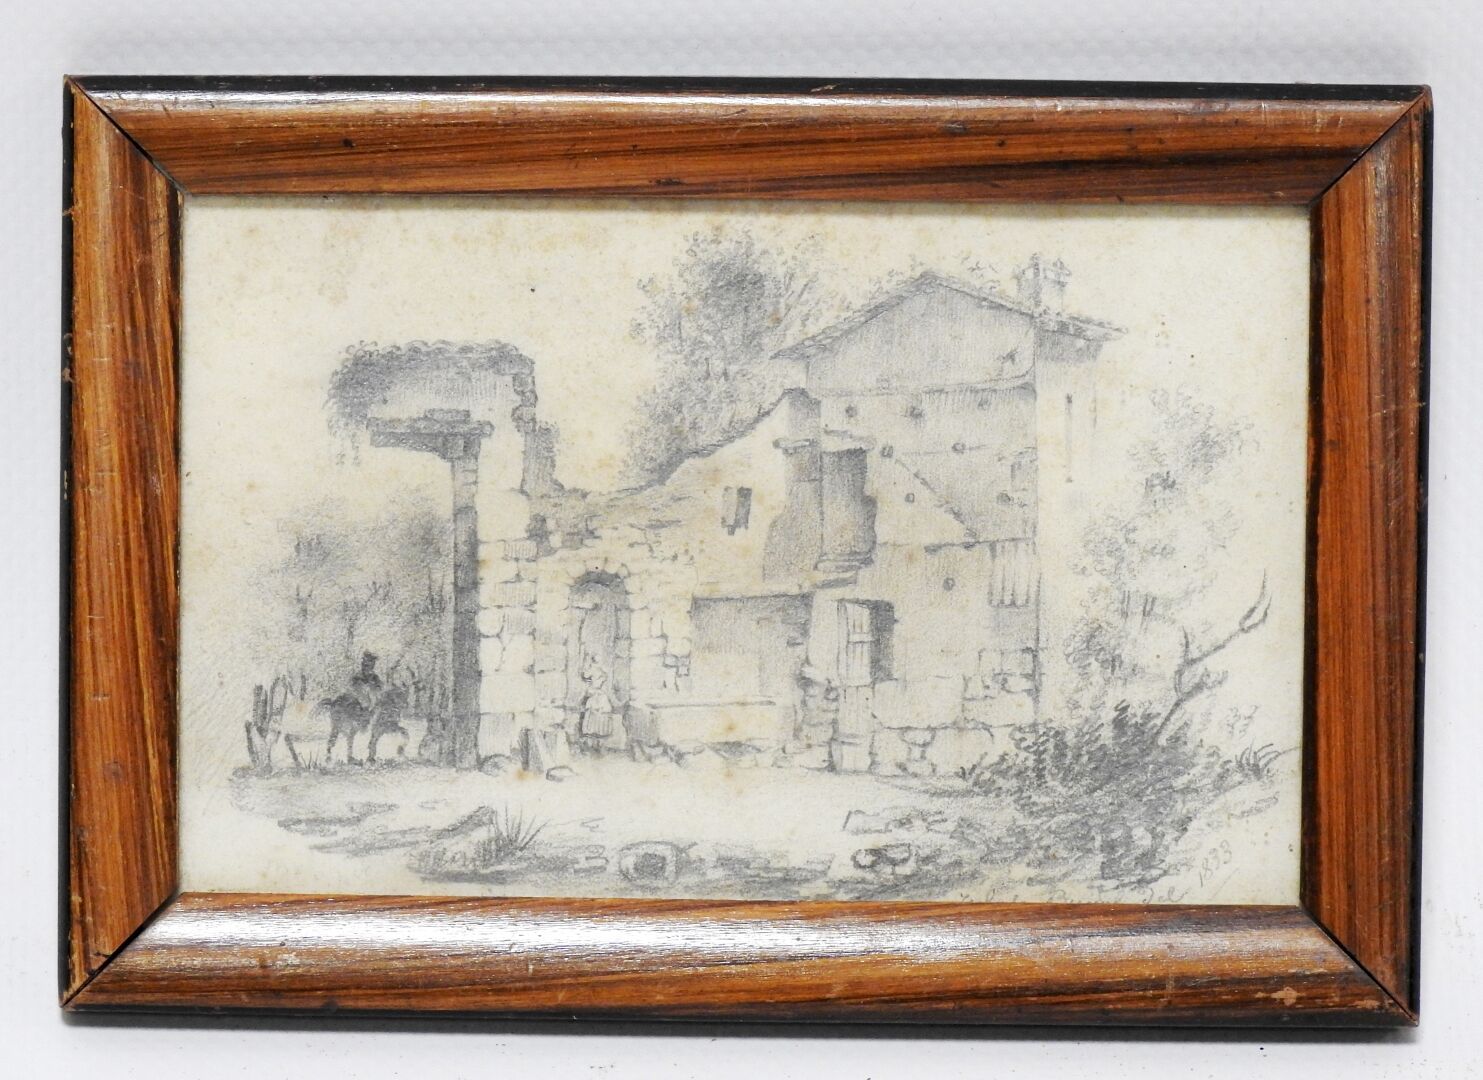 Null Jules BUVAL - 19世纪
毁灭。
铅笔画。右下方有签名和日期1833年。
8,5 x 13,5 cm at sight.
有些褪色。